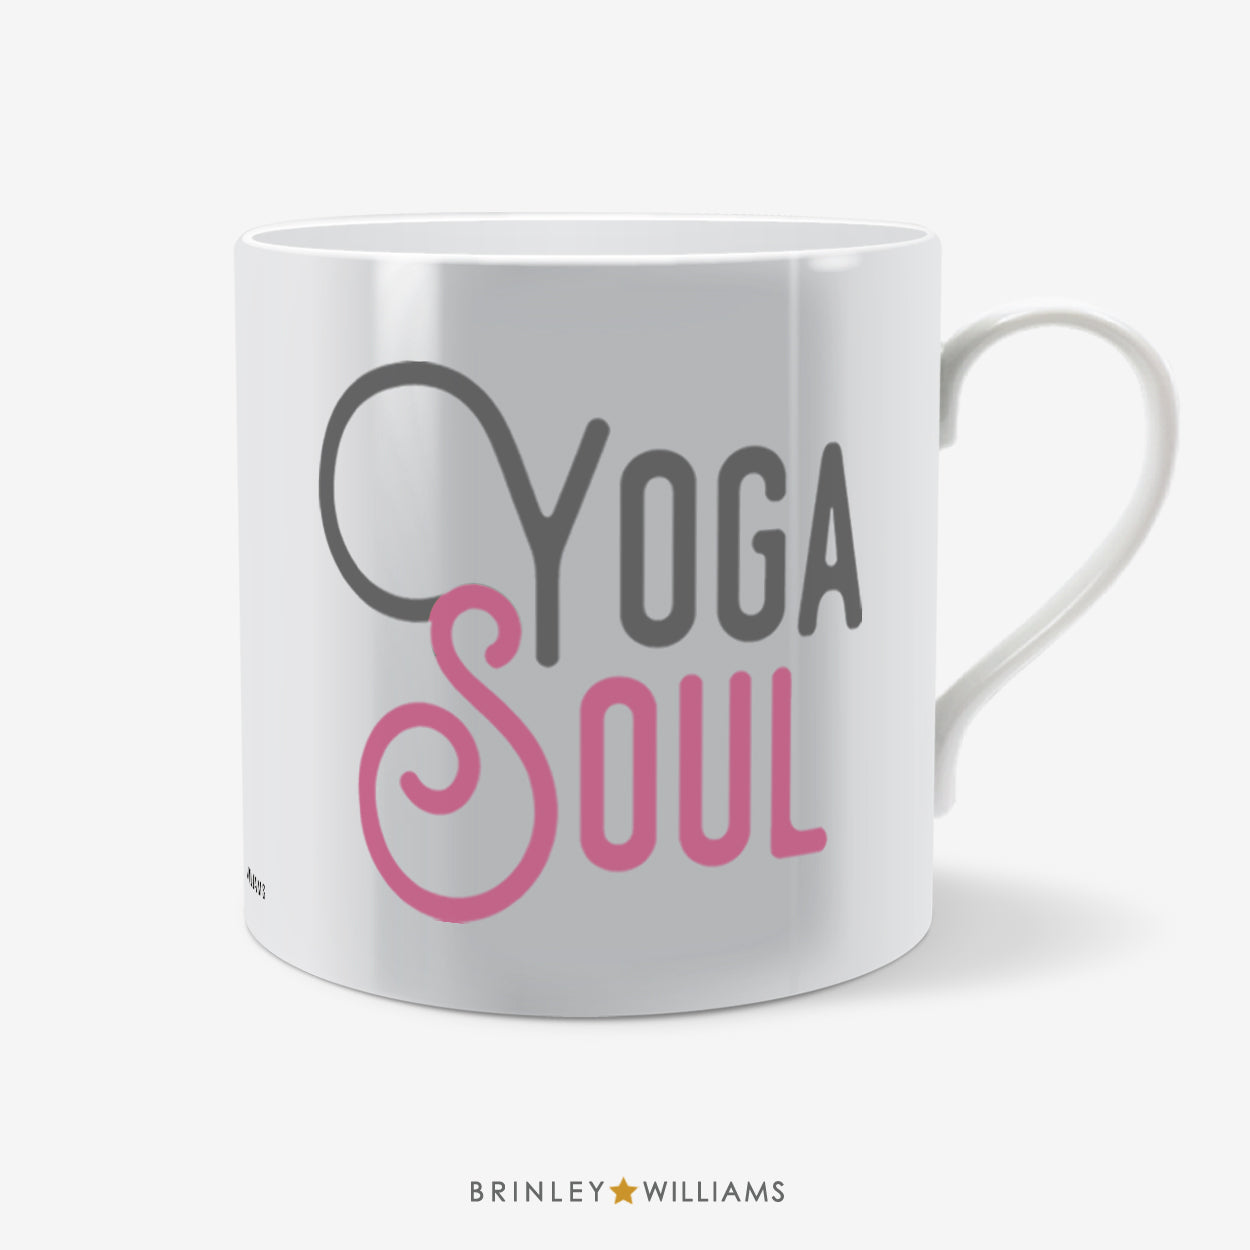 Yoga Soul Mug - Pink